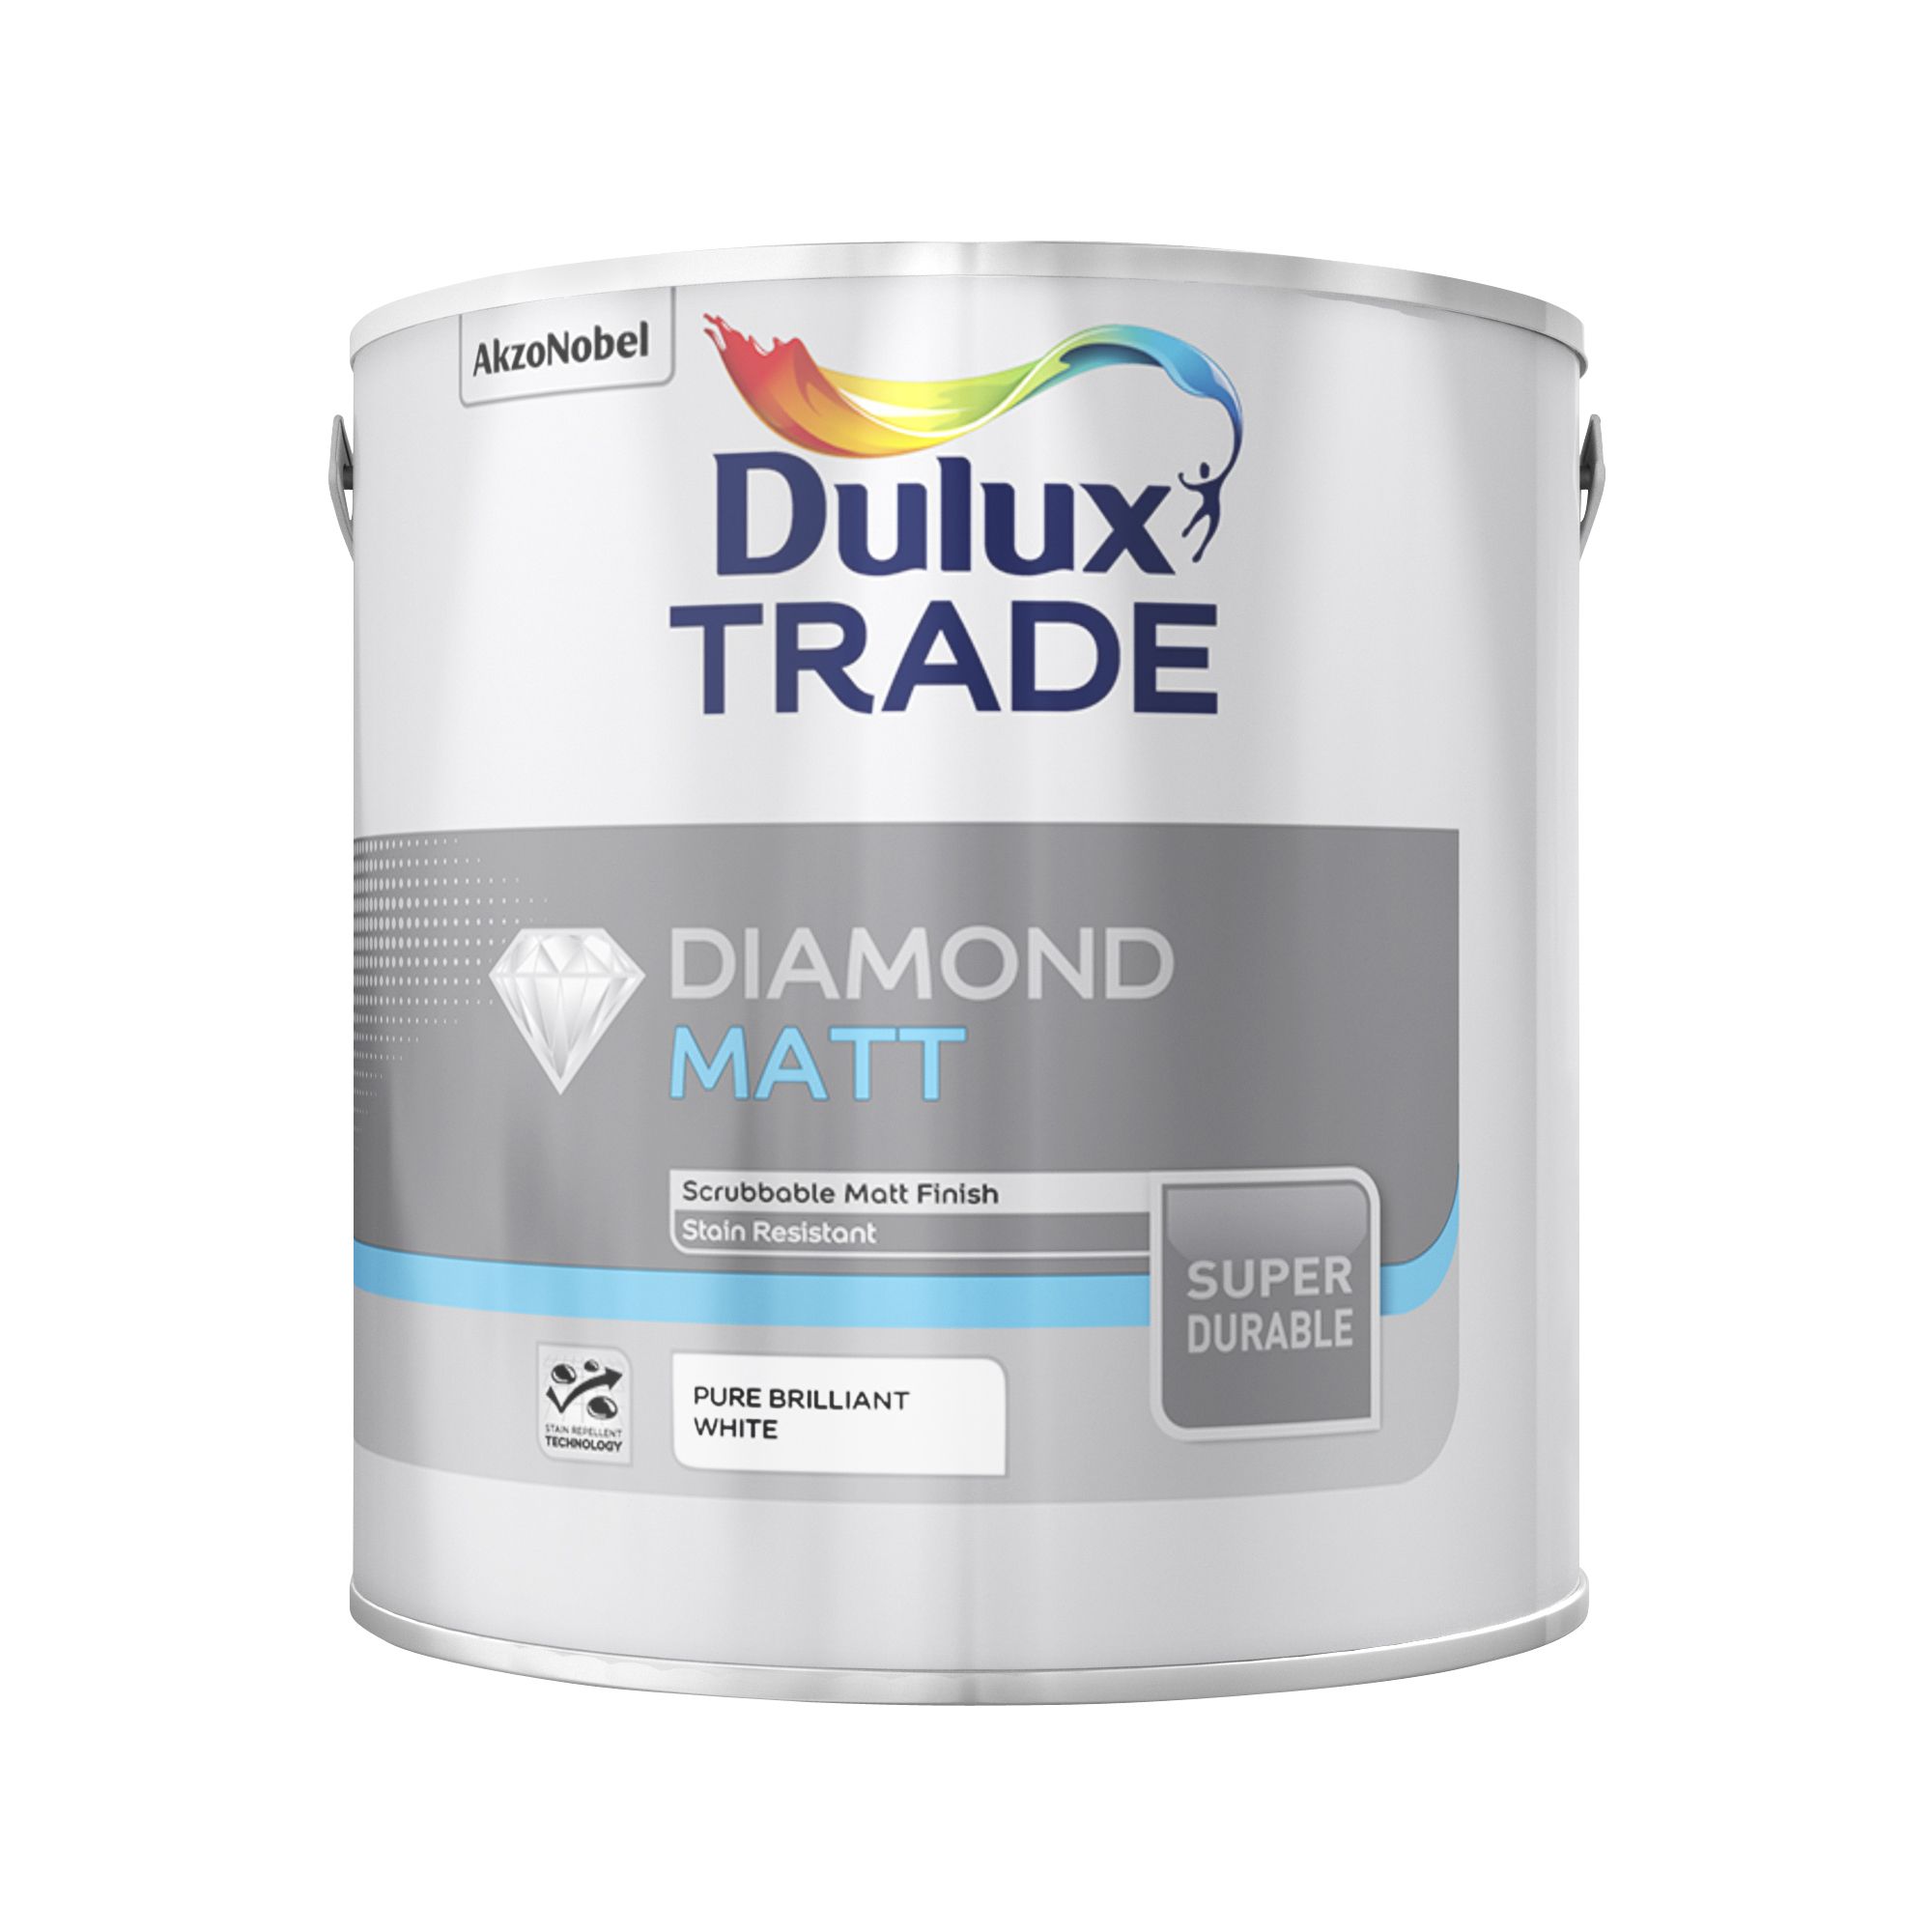 Dulux Trade Diamond Pure brilliant white Matt Emulsion paint, 2.5L